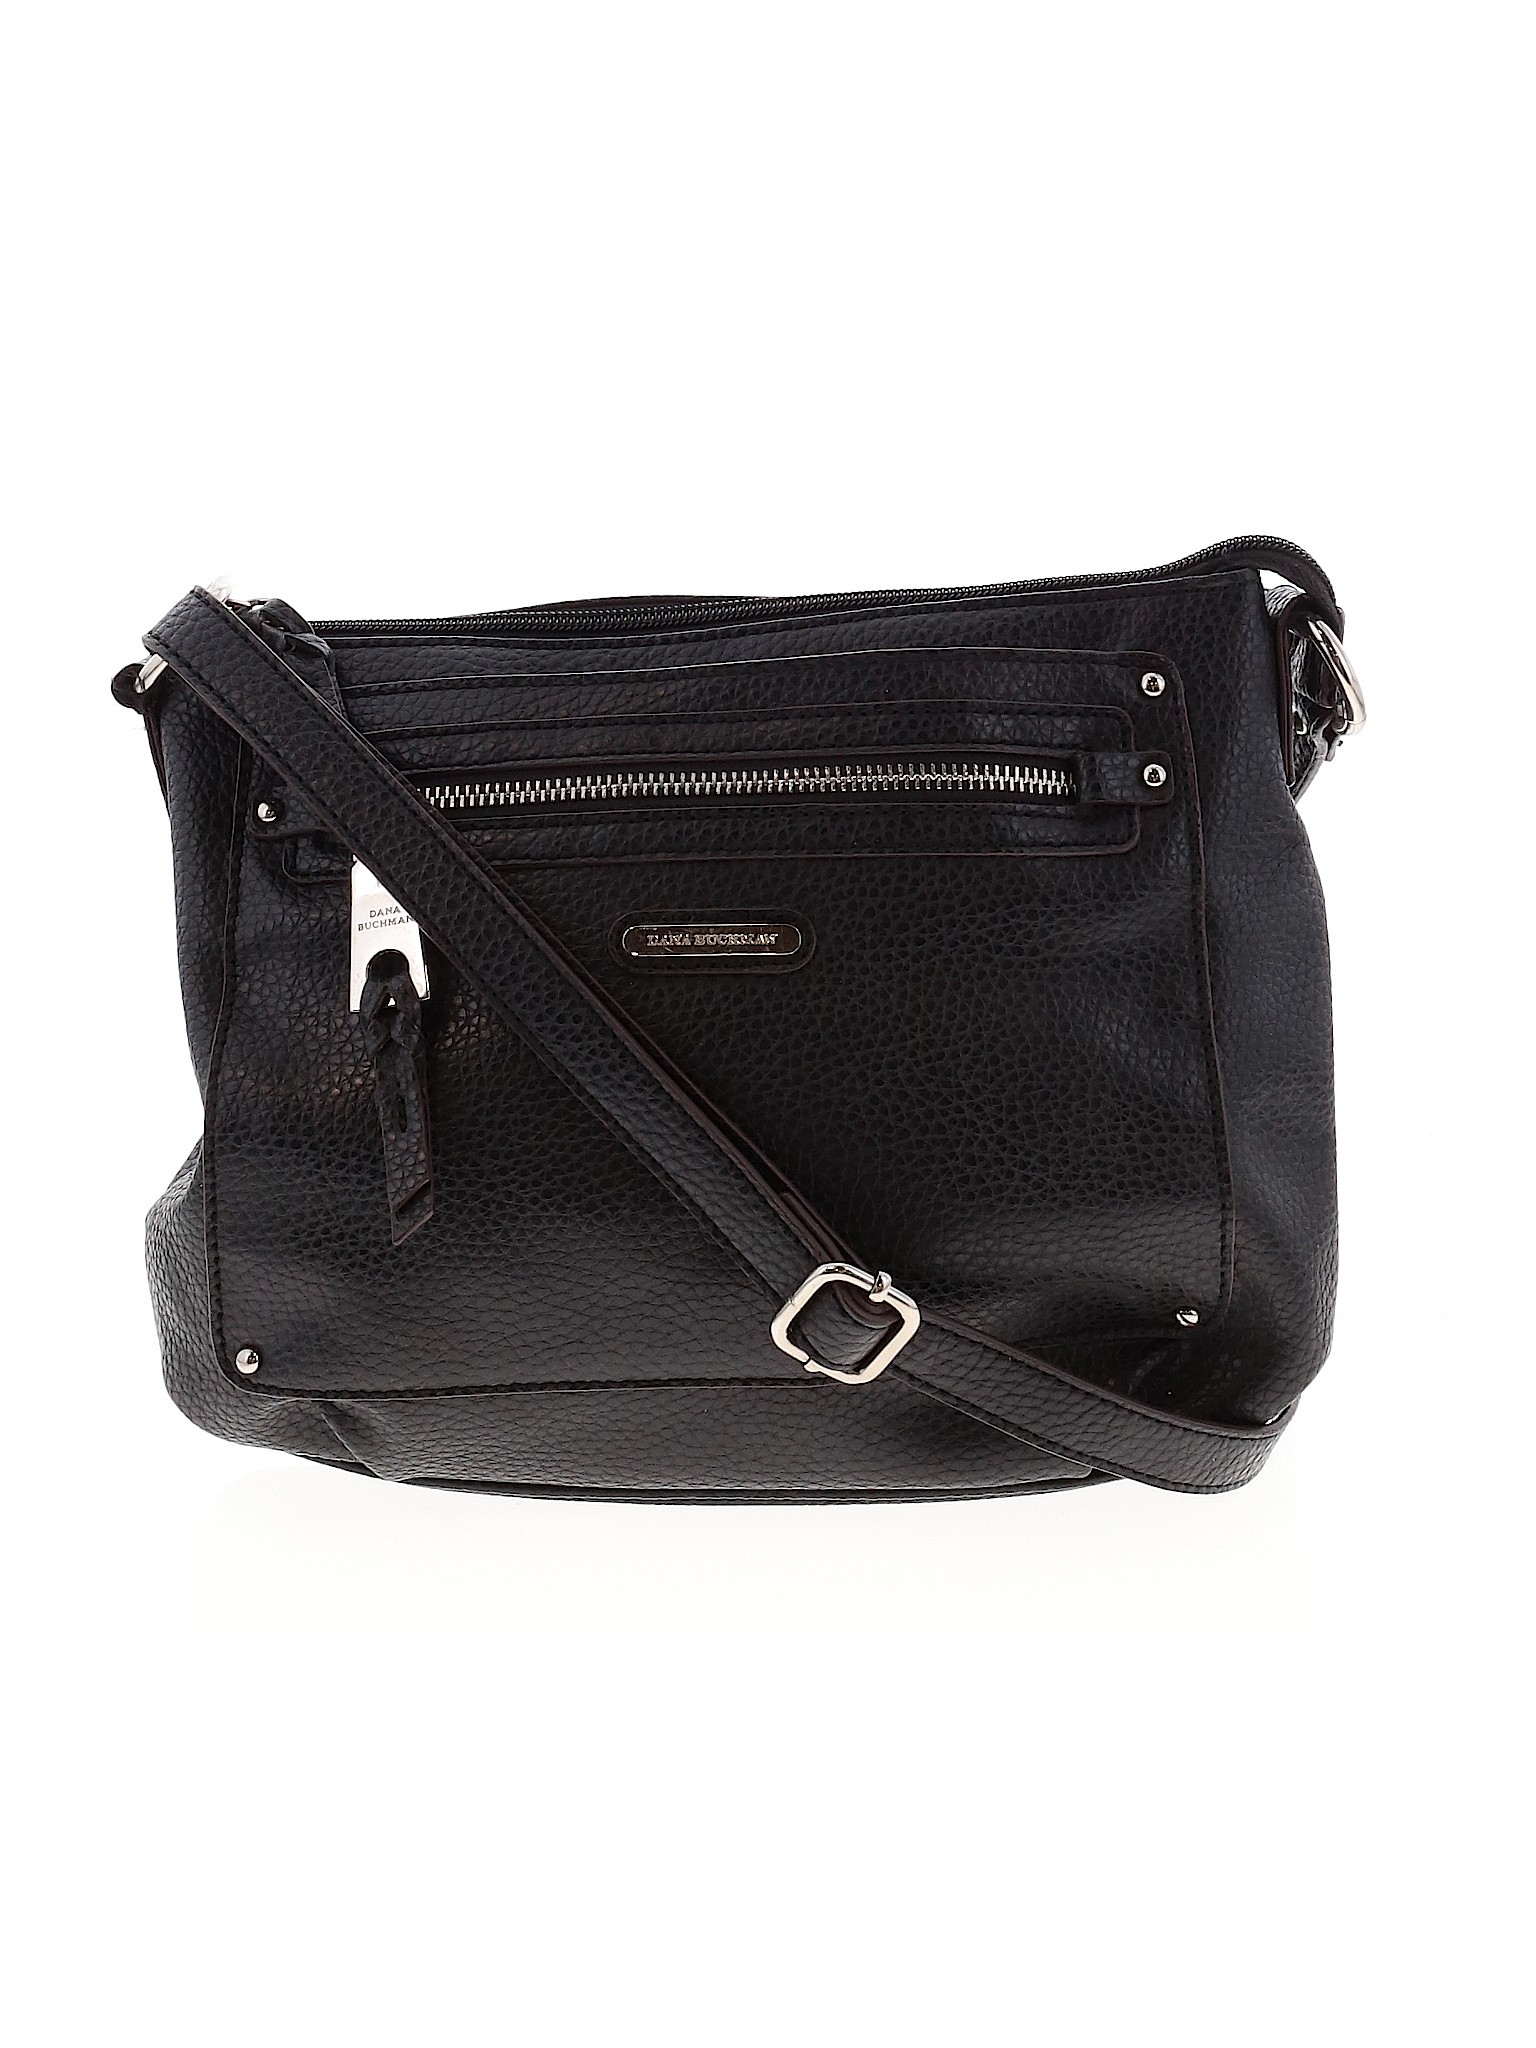 Dana Buchman Women Black Crossbody Bag One Size | eBay